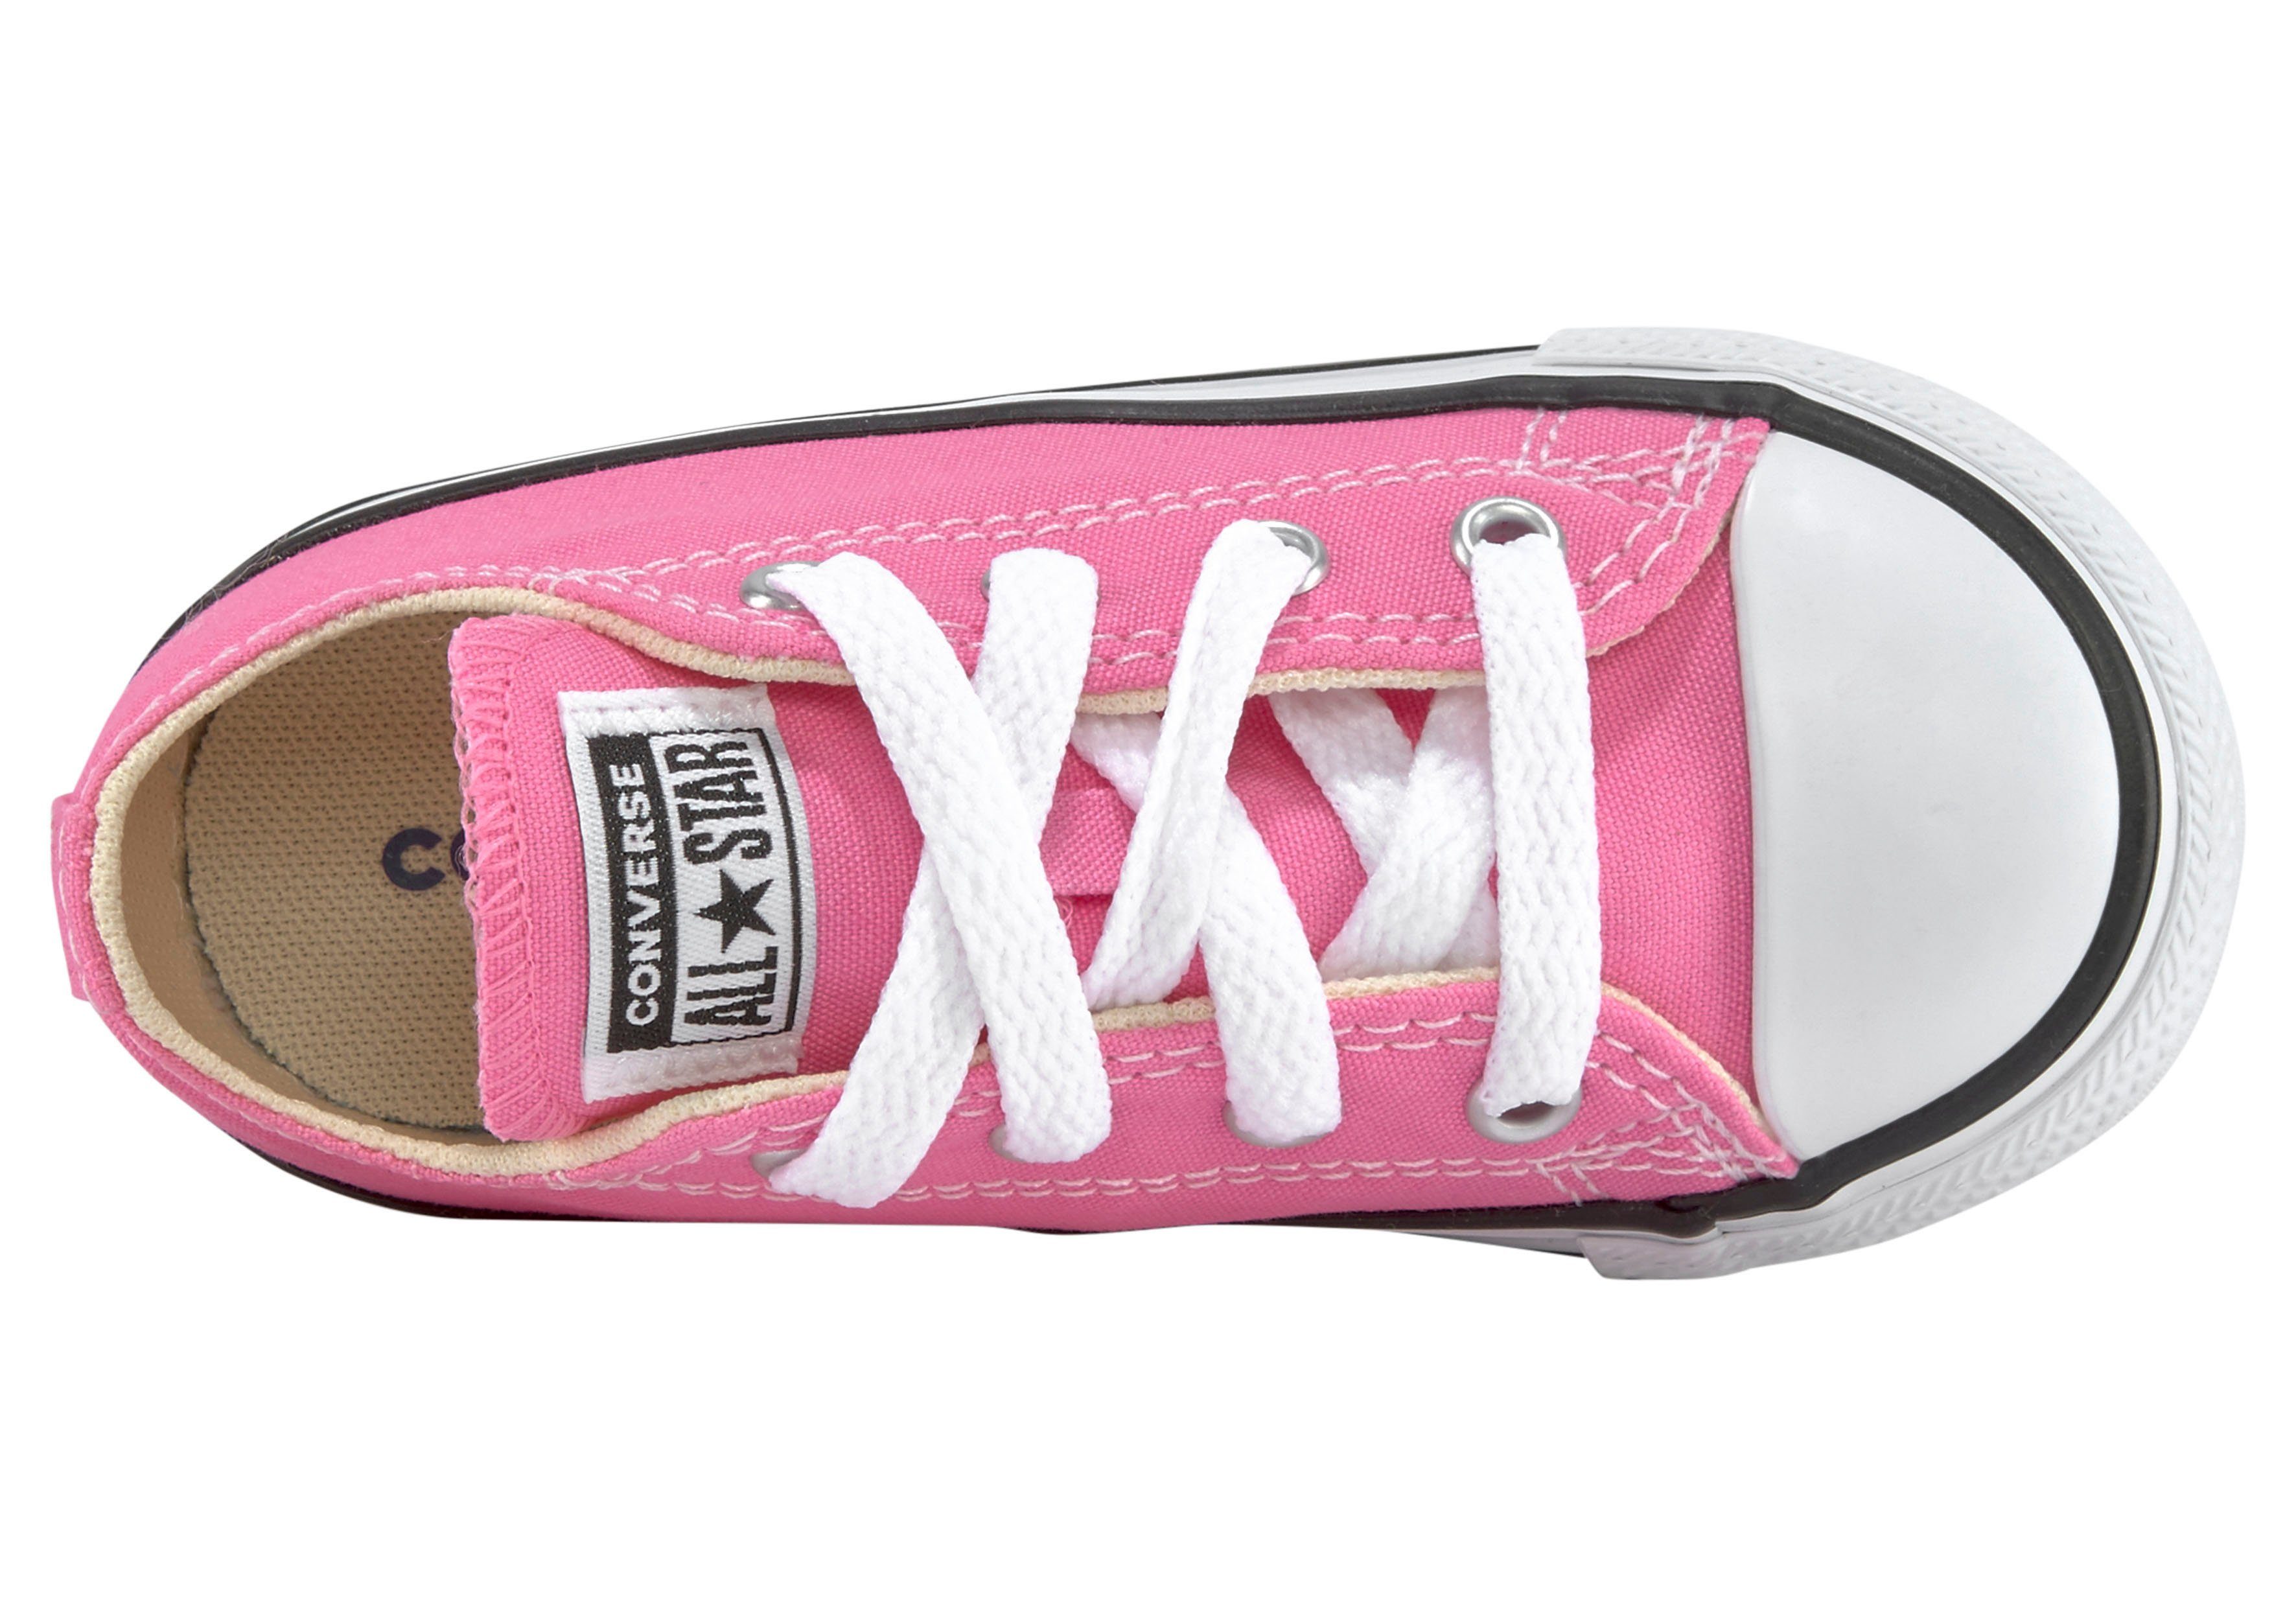 Converse Sneaker CHUCK OX Kinder rosa TAYLOR STAR für ALL